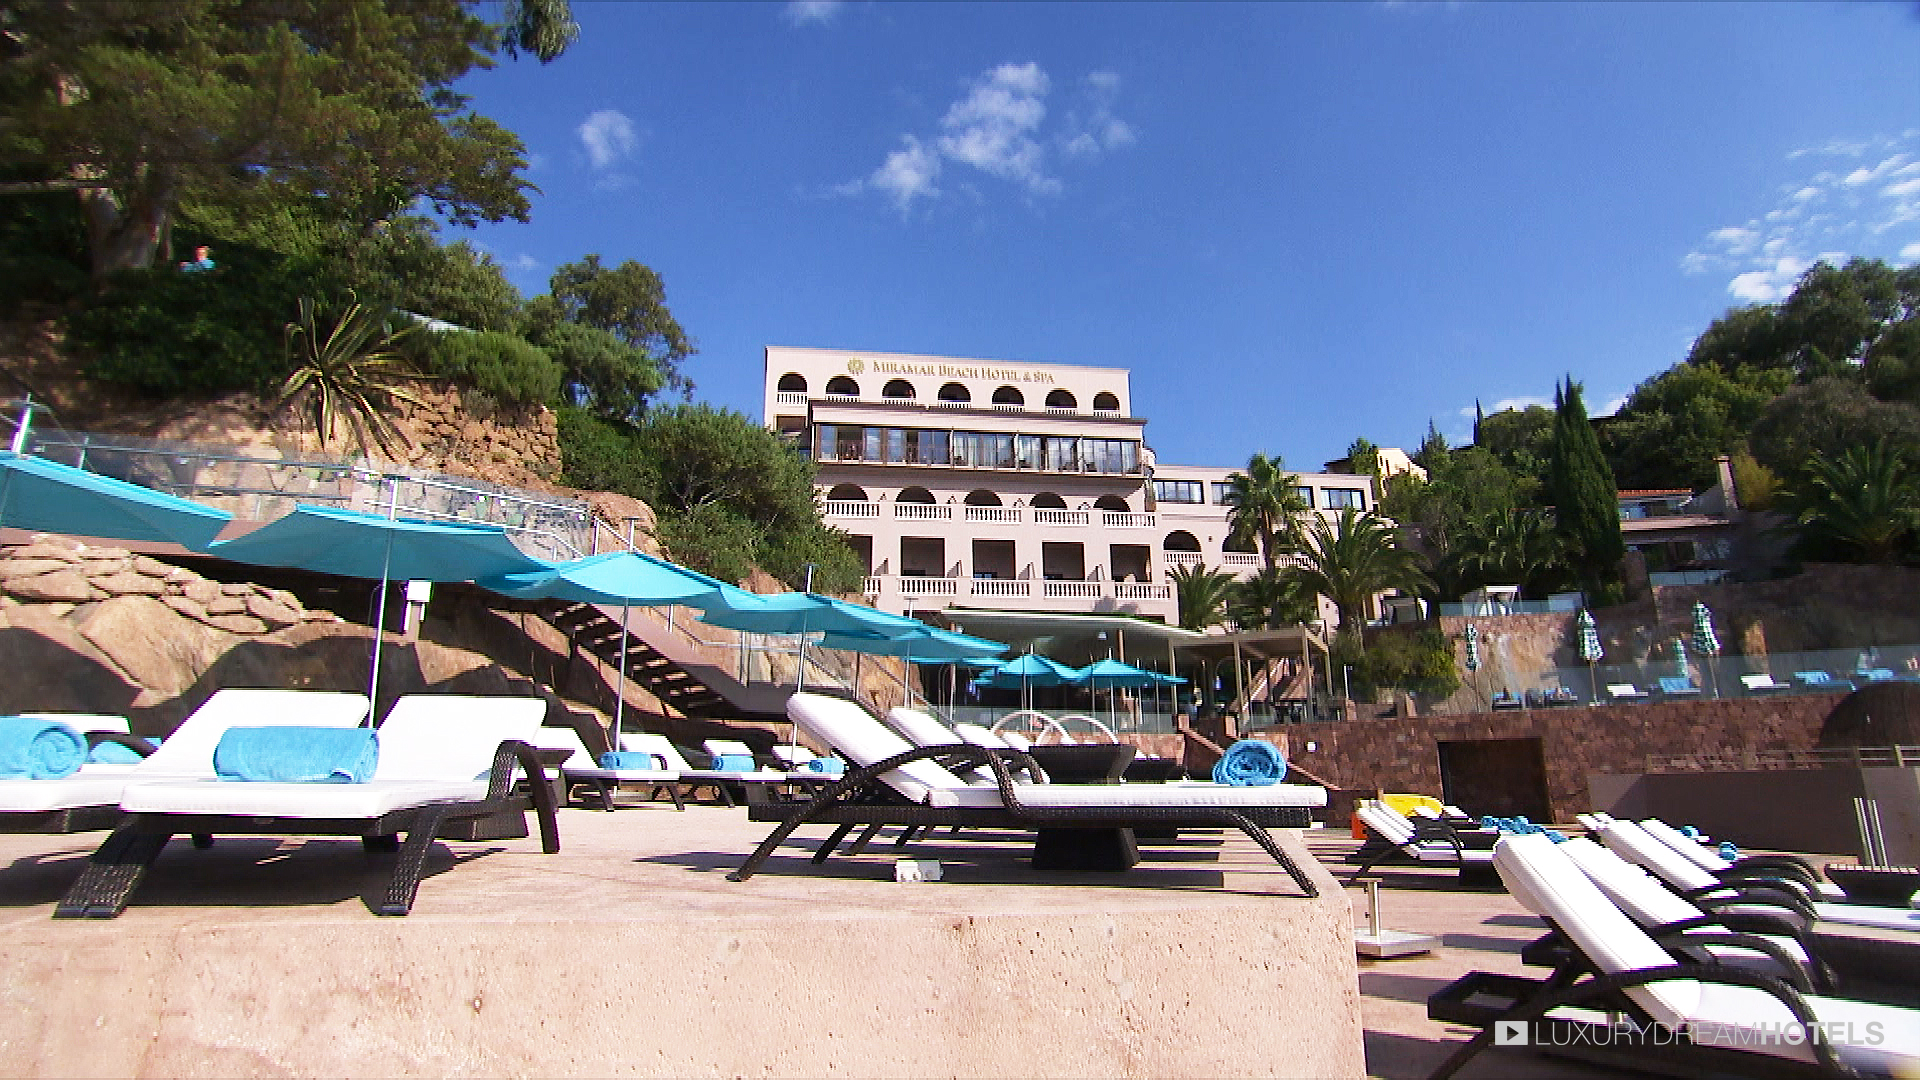 Luxury hotel, Tiara Beach Spa, Théoule sur Mer, France - Luxury Dream Hotels